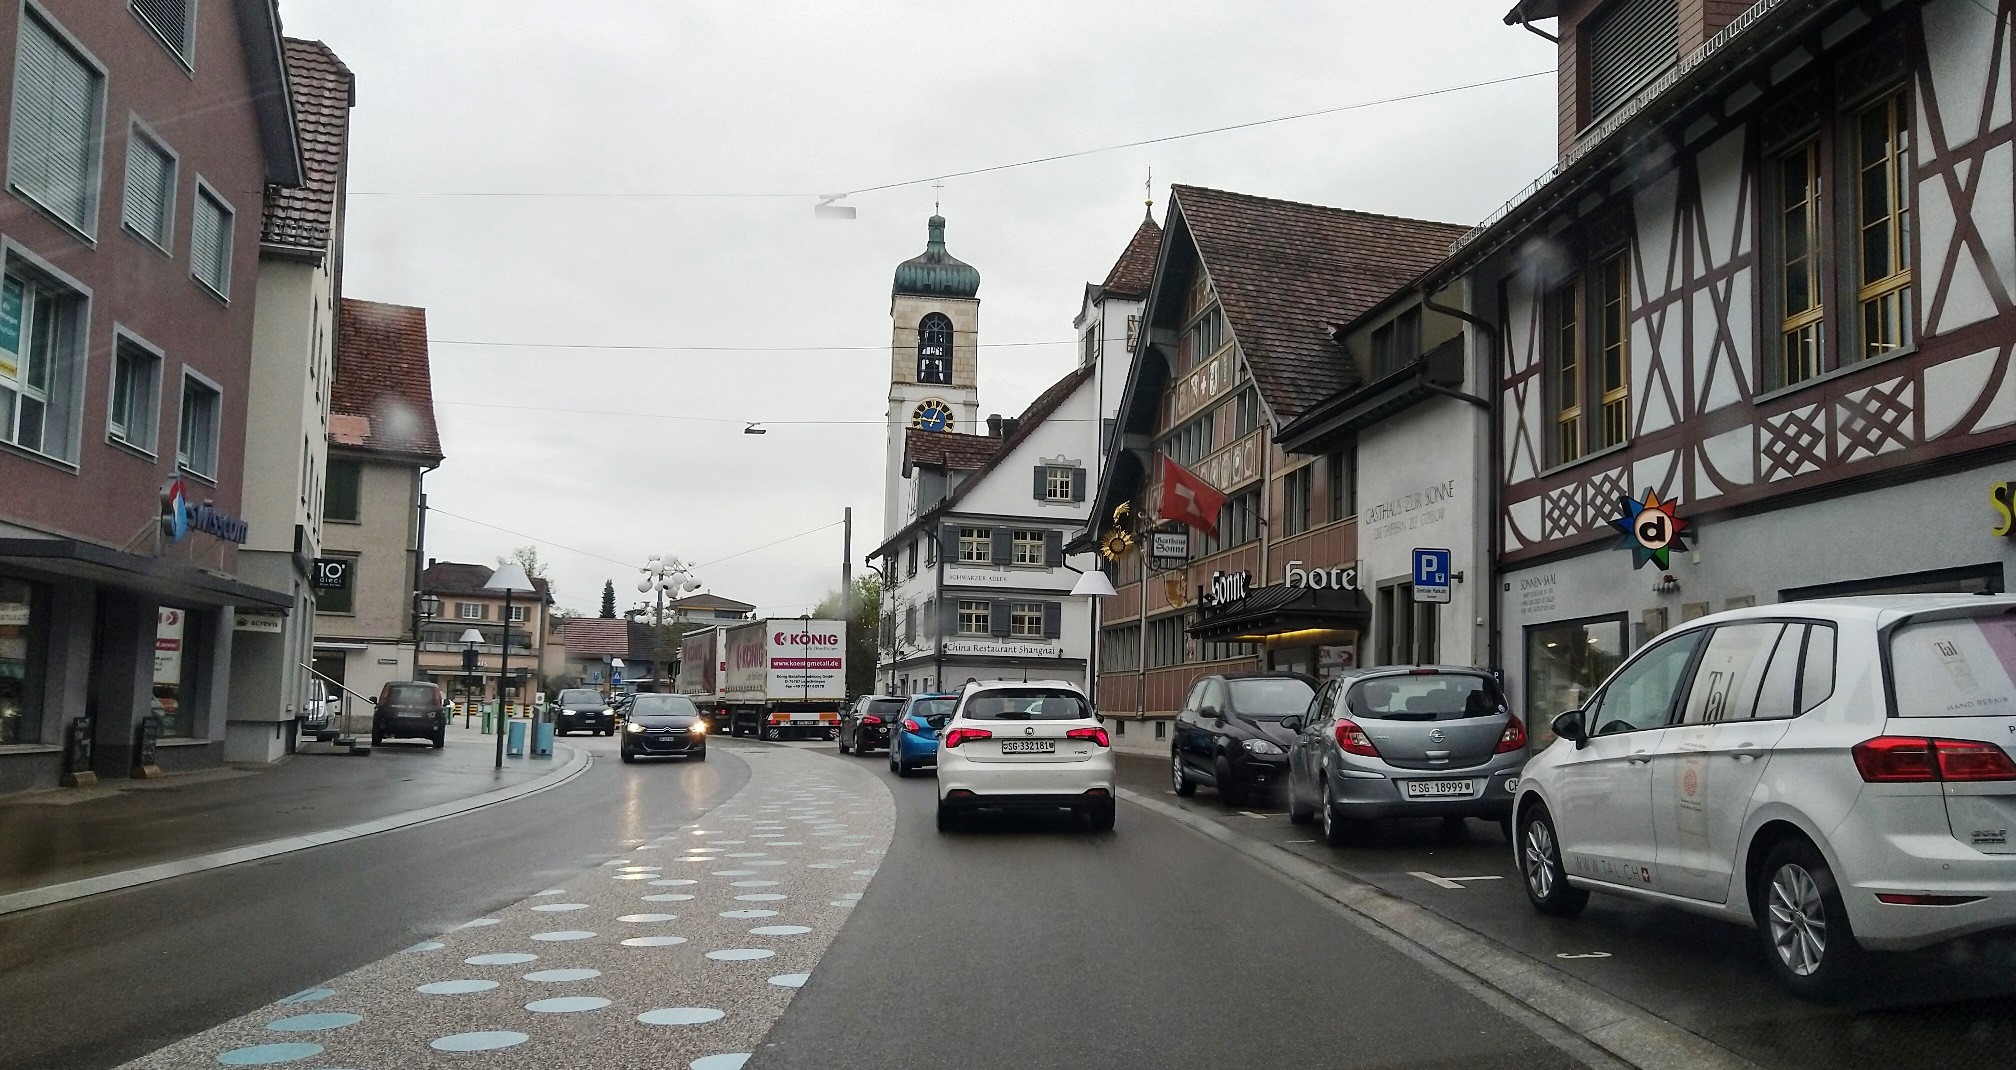 Swiss town of Haag